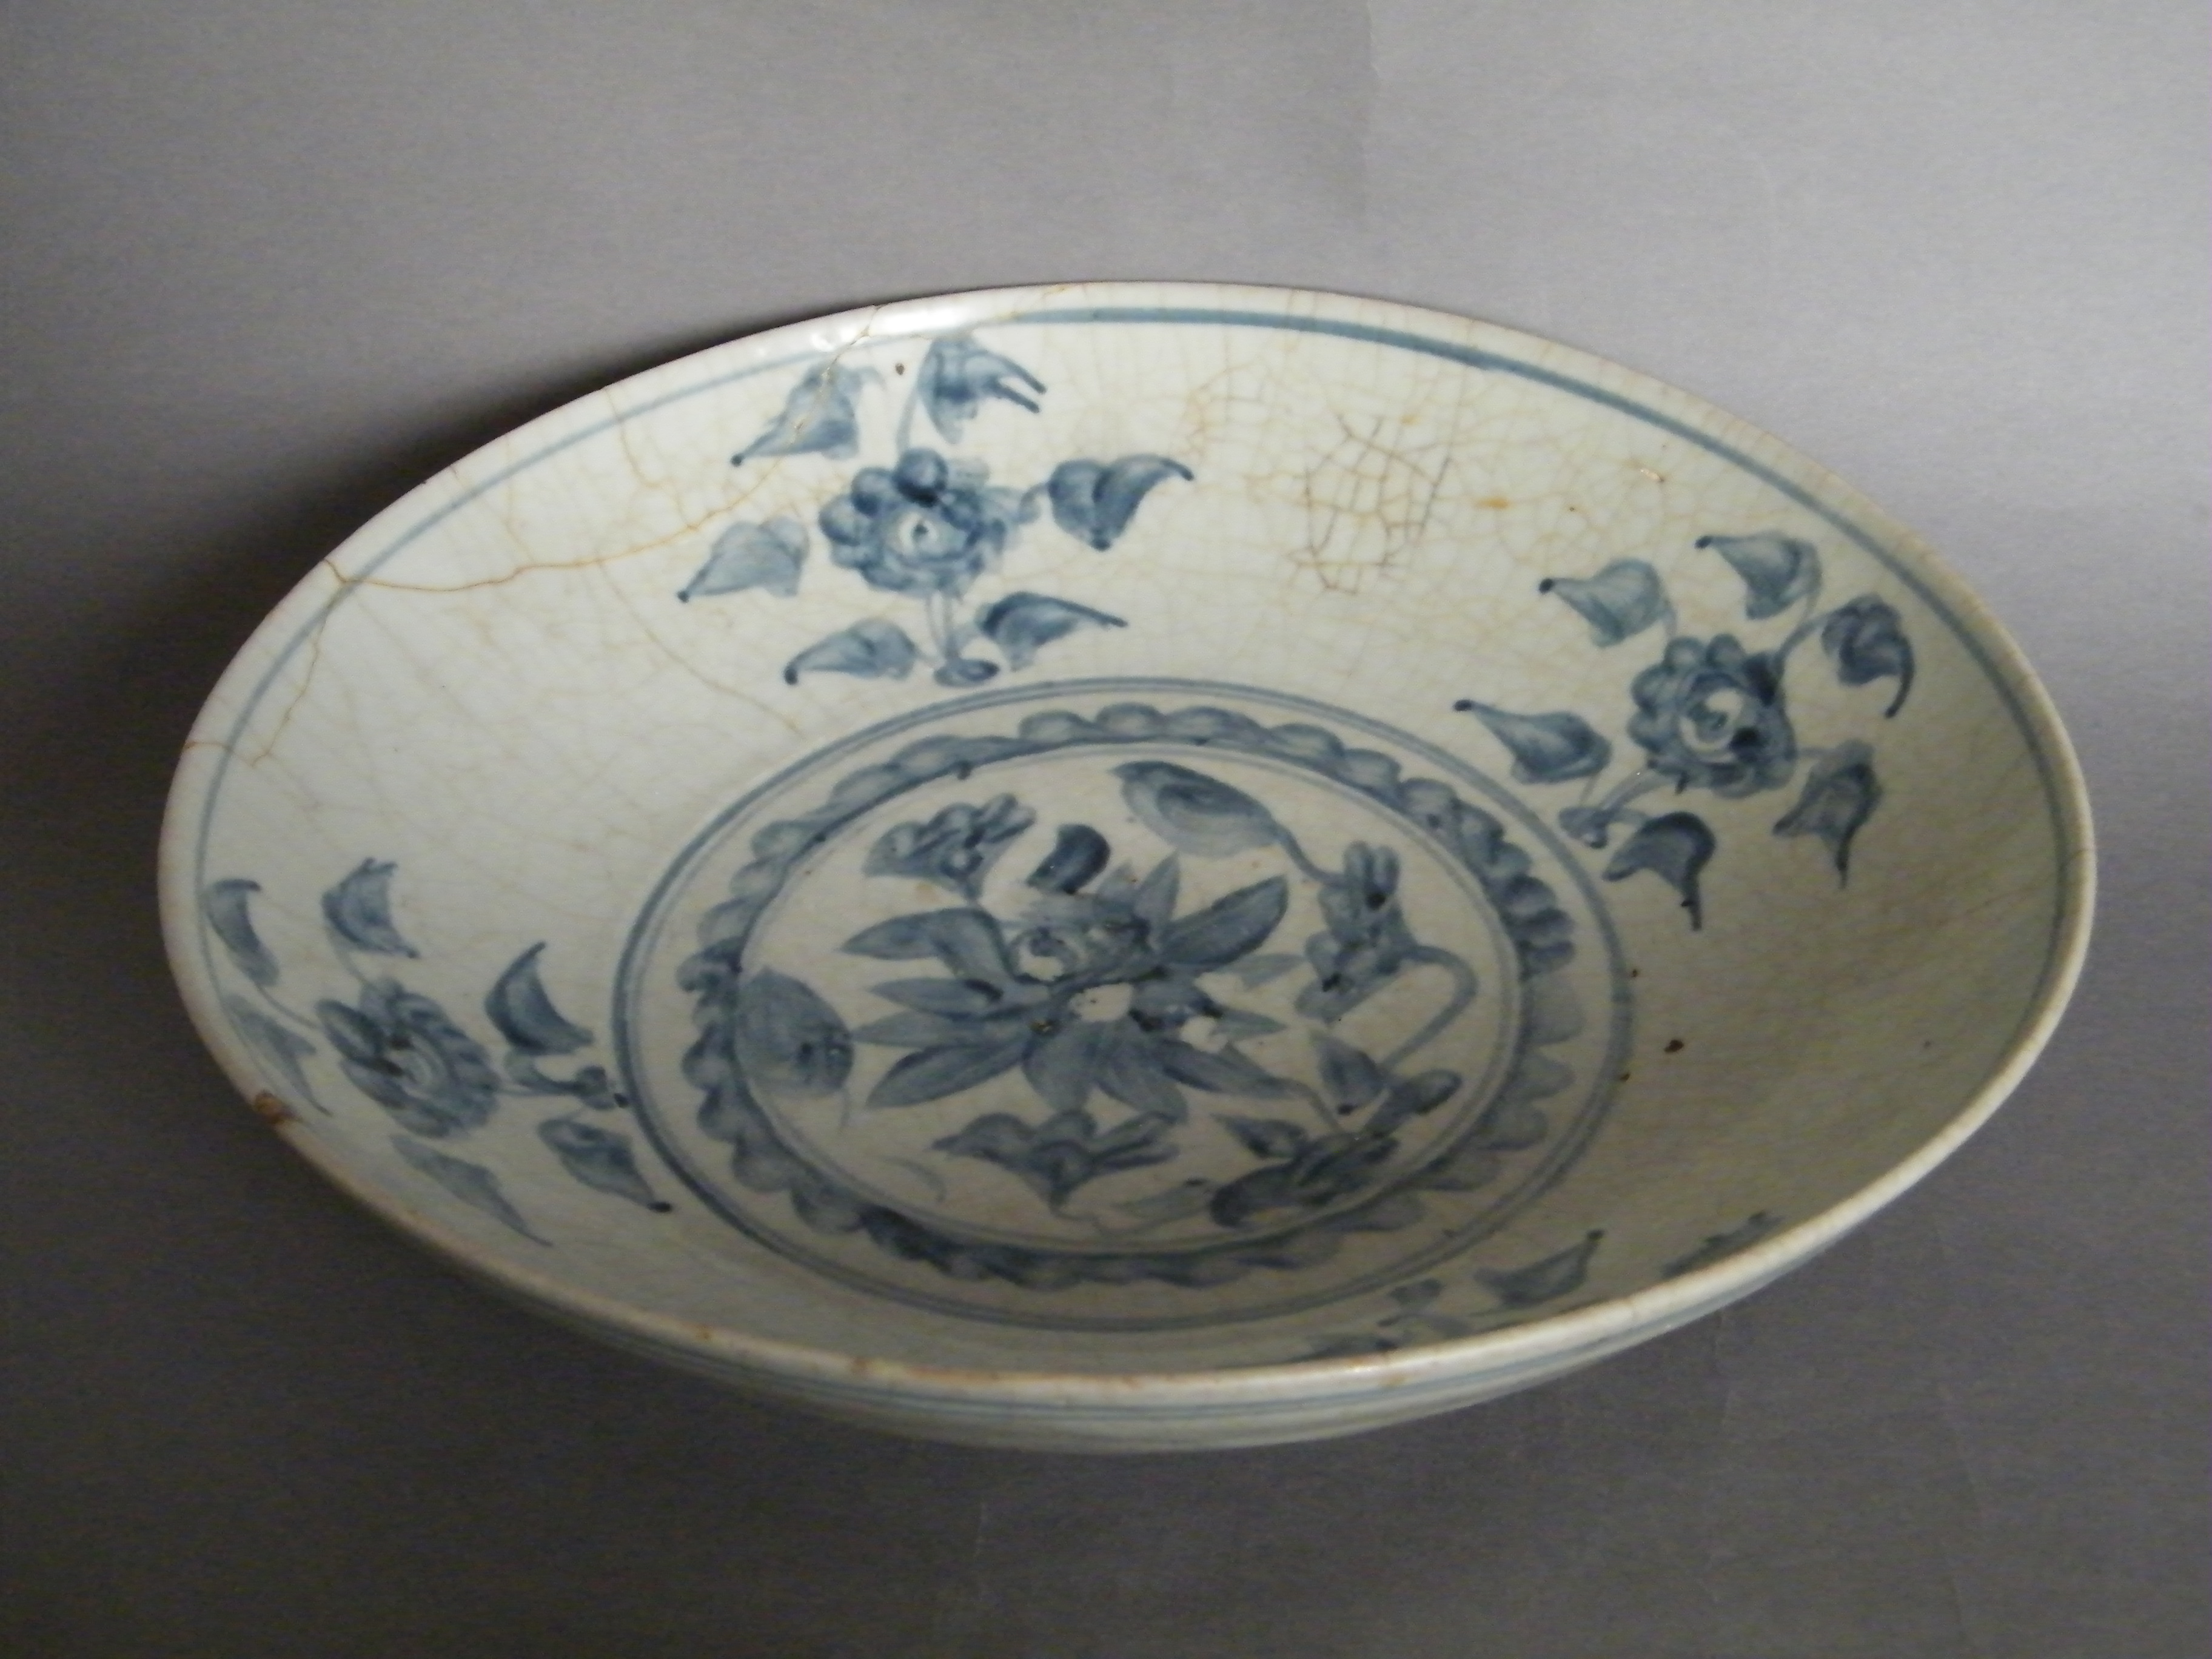 #1639  Large Late Ming Dynasty Dish from Zhangzhou, China, circa 1550 - 1600